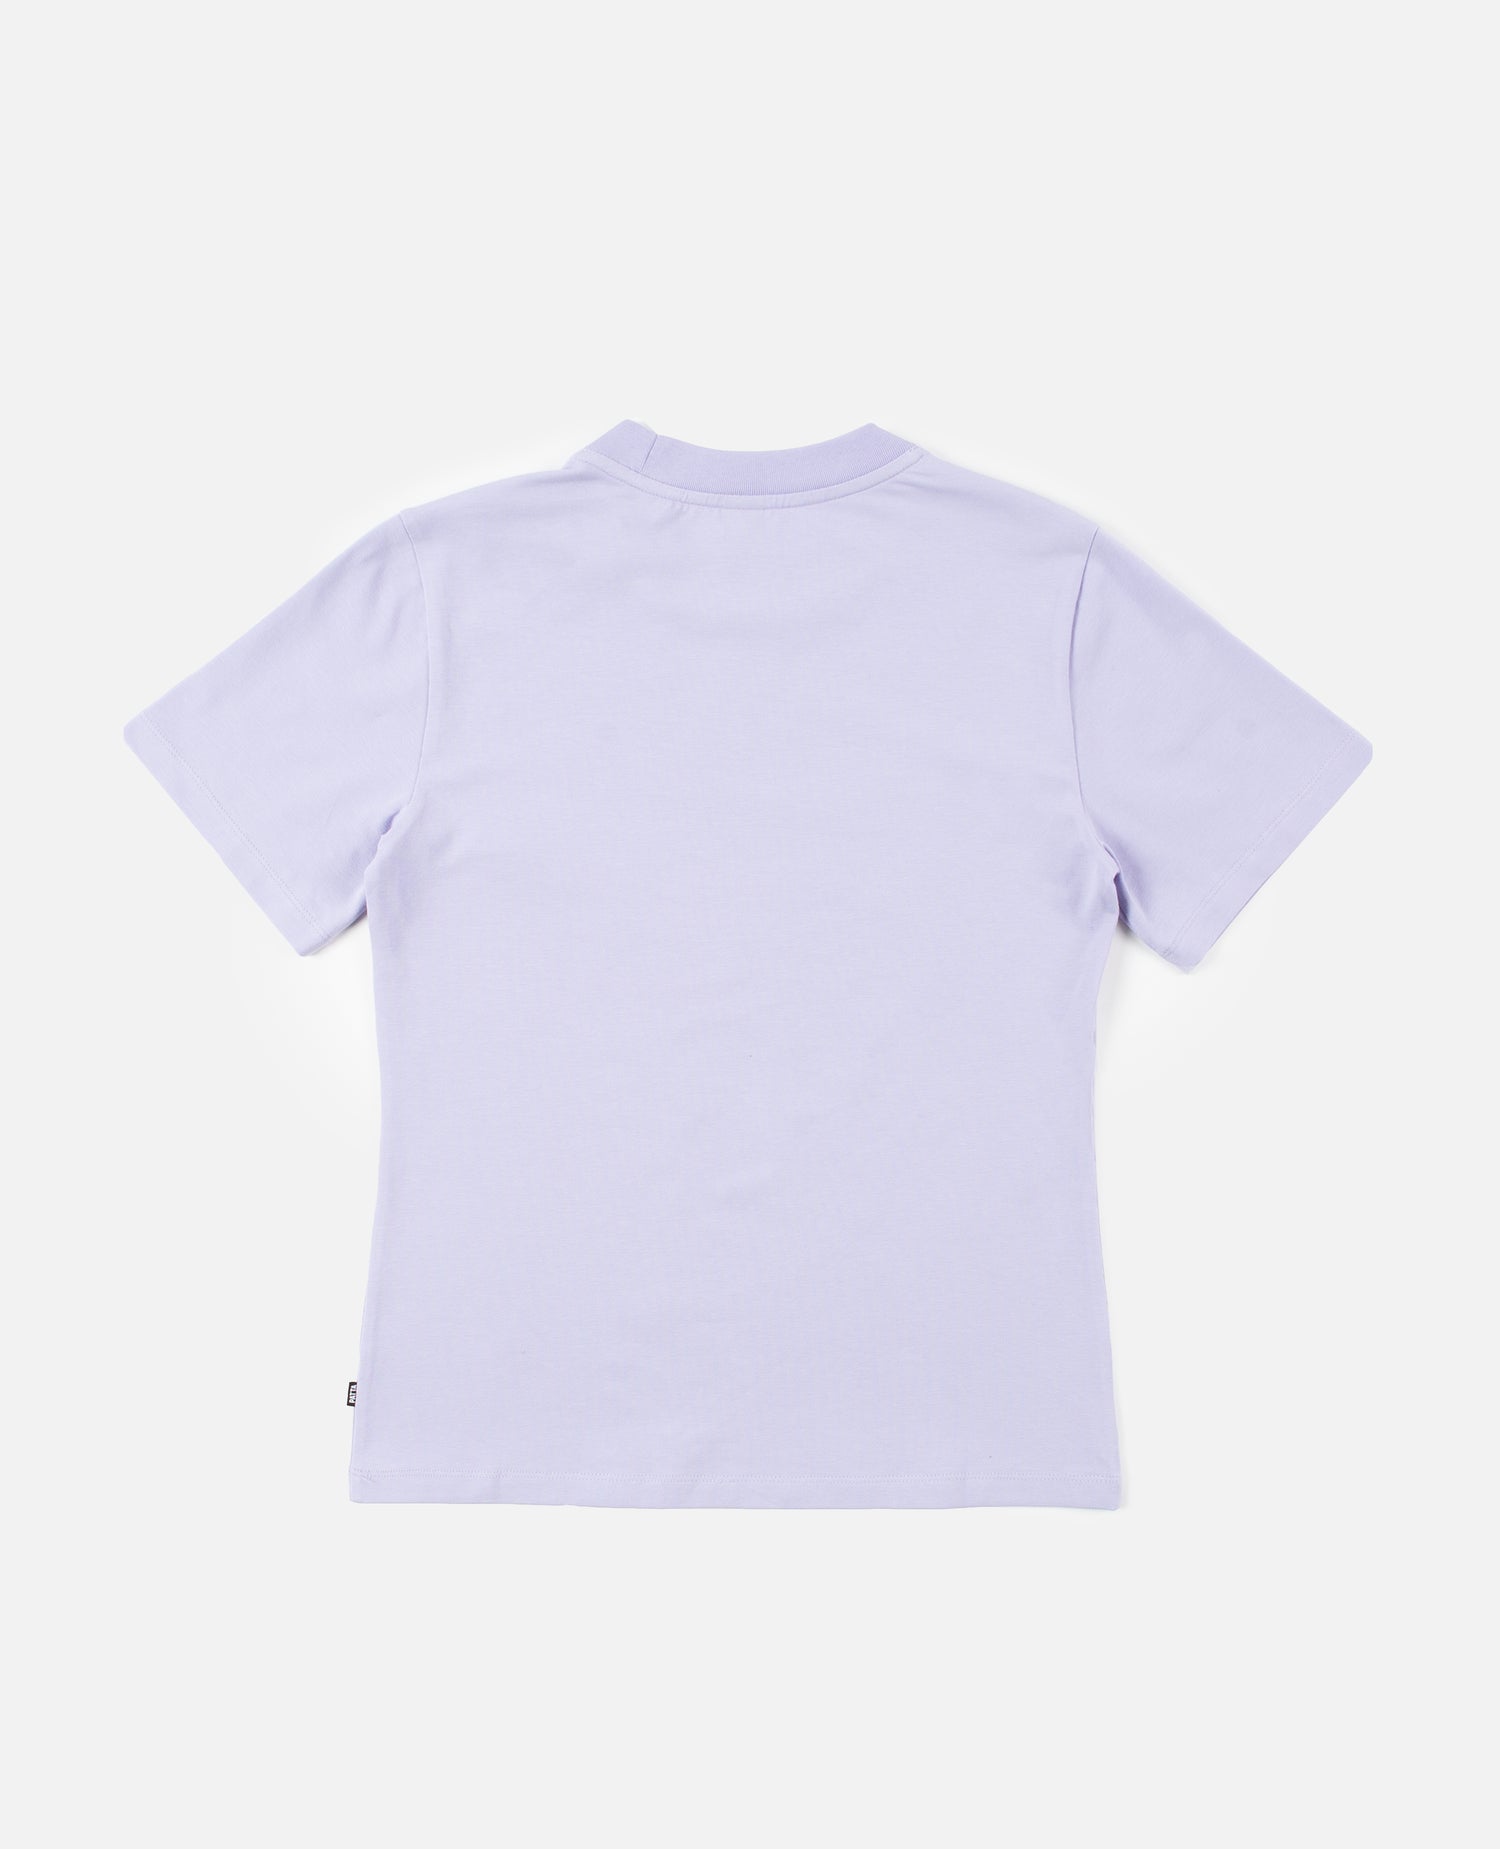 Patta Femme Basic Fitted T-Shirt (Lavender)